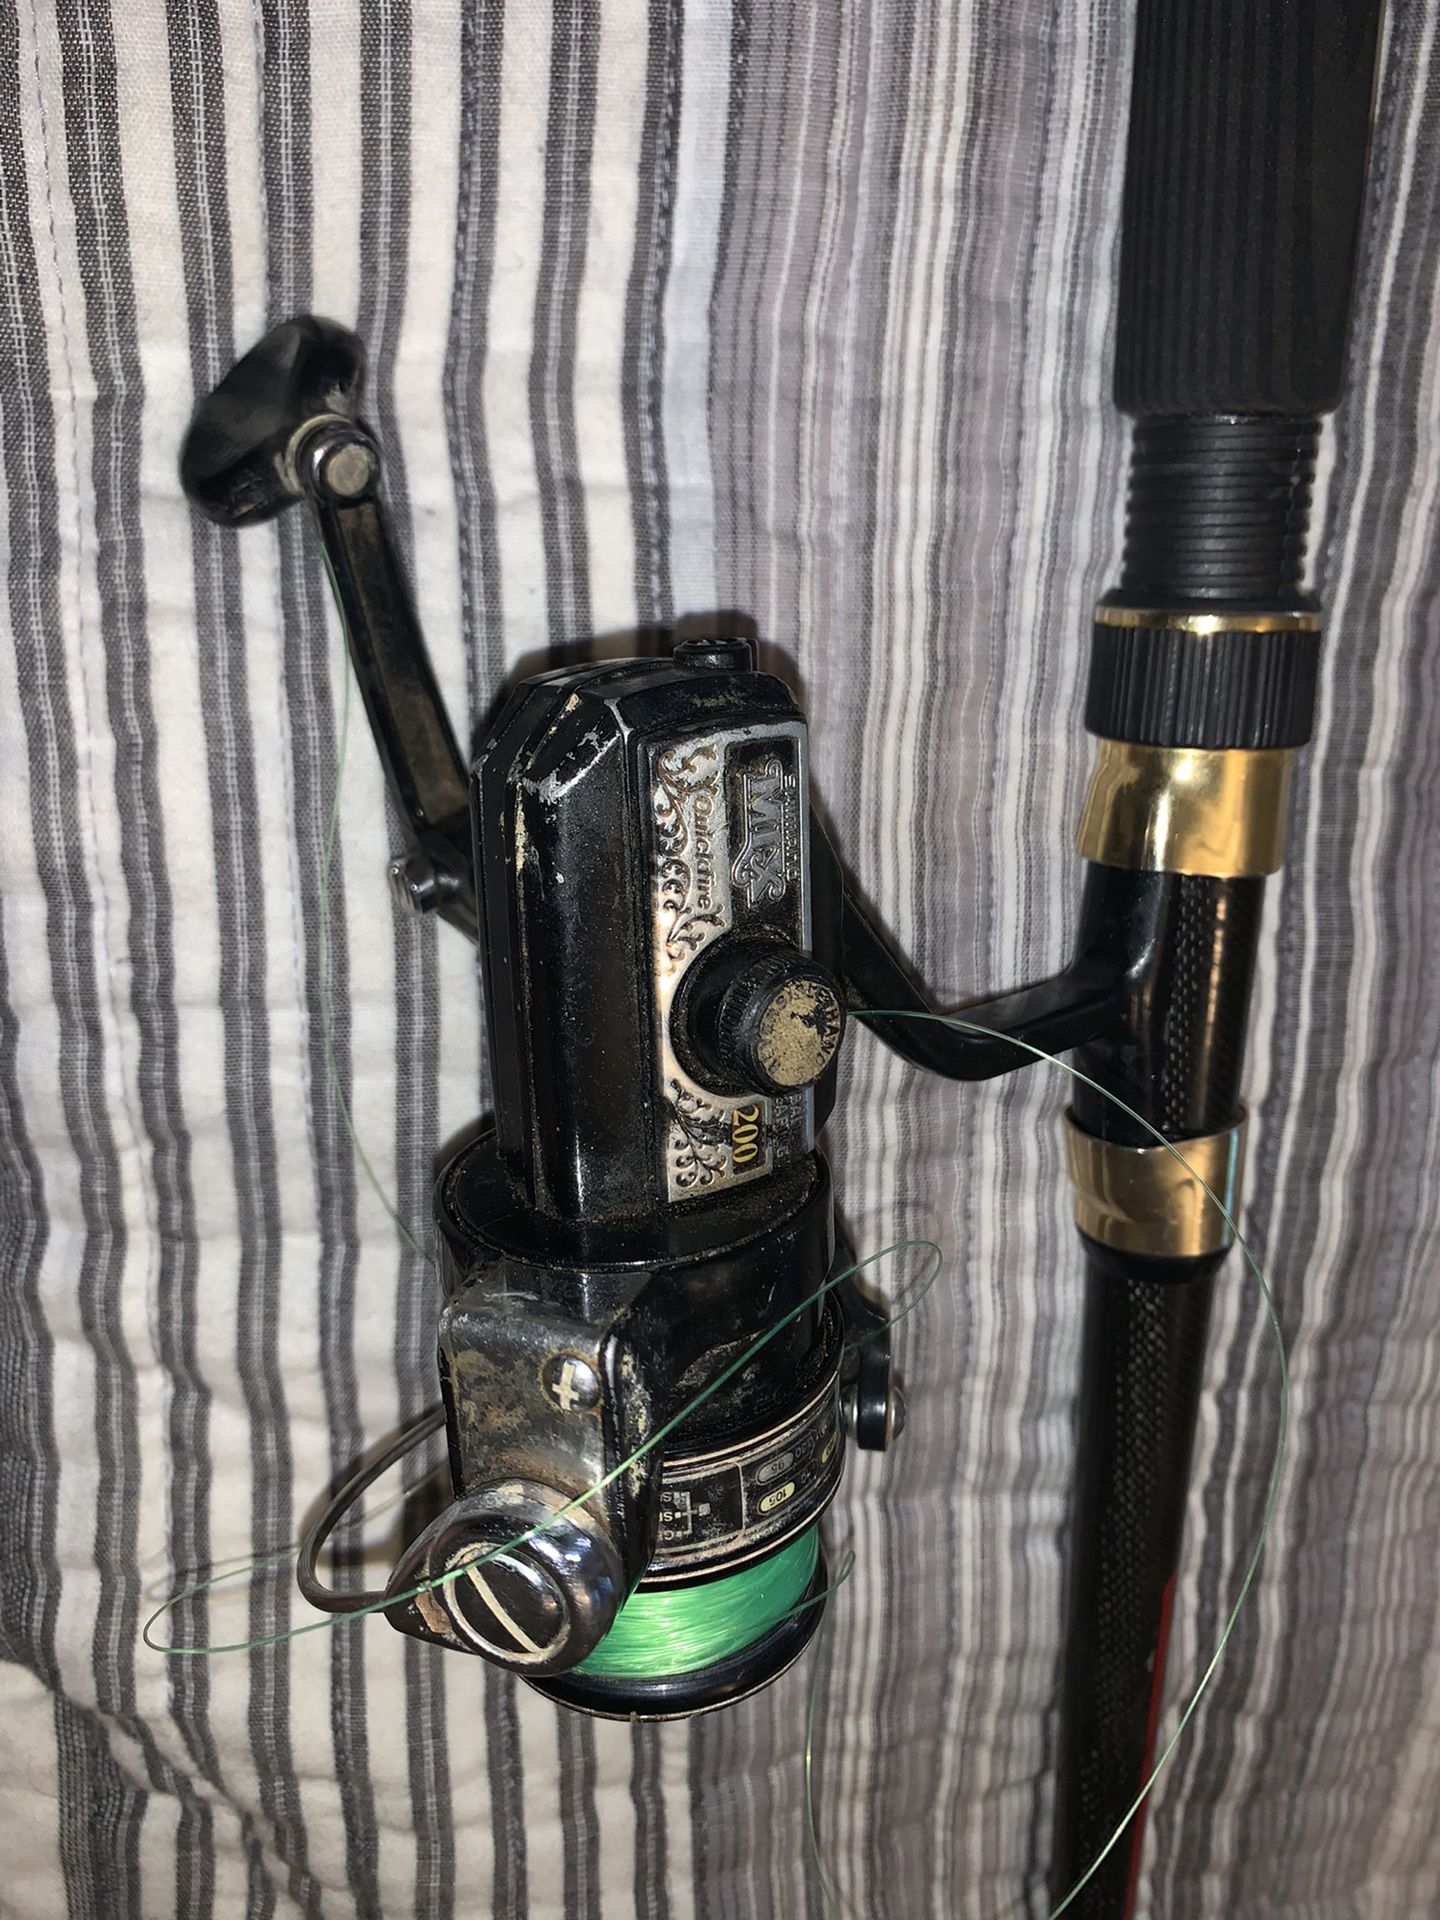 4 fishing rod and reels . shock model cabelas 8066 fiber hlass and vintage reels .